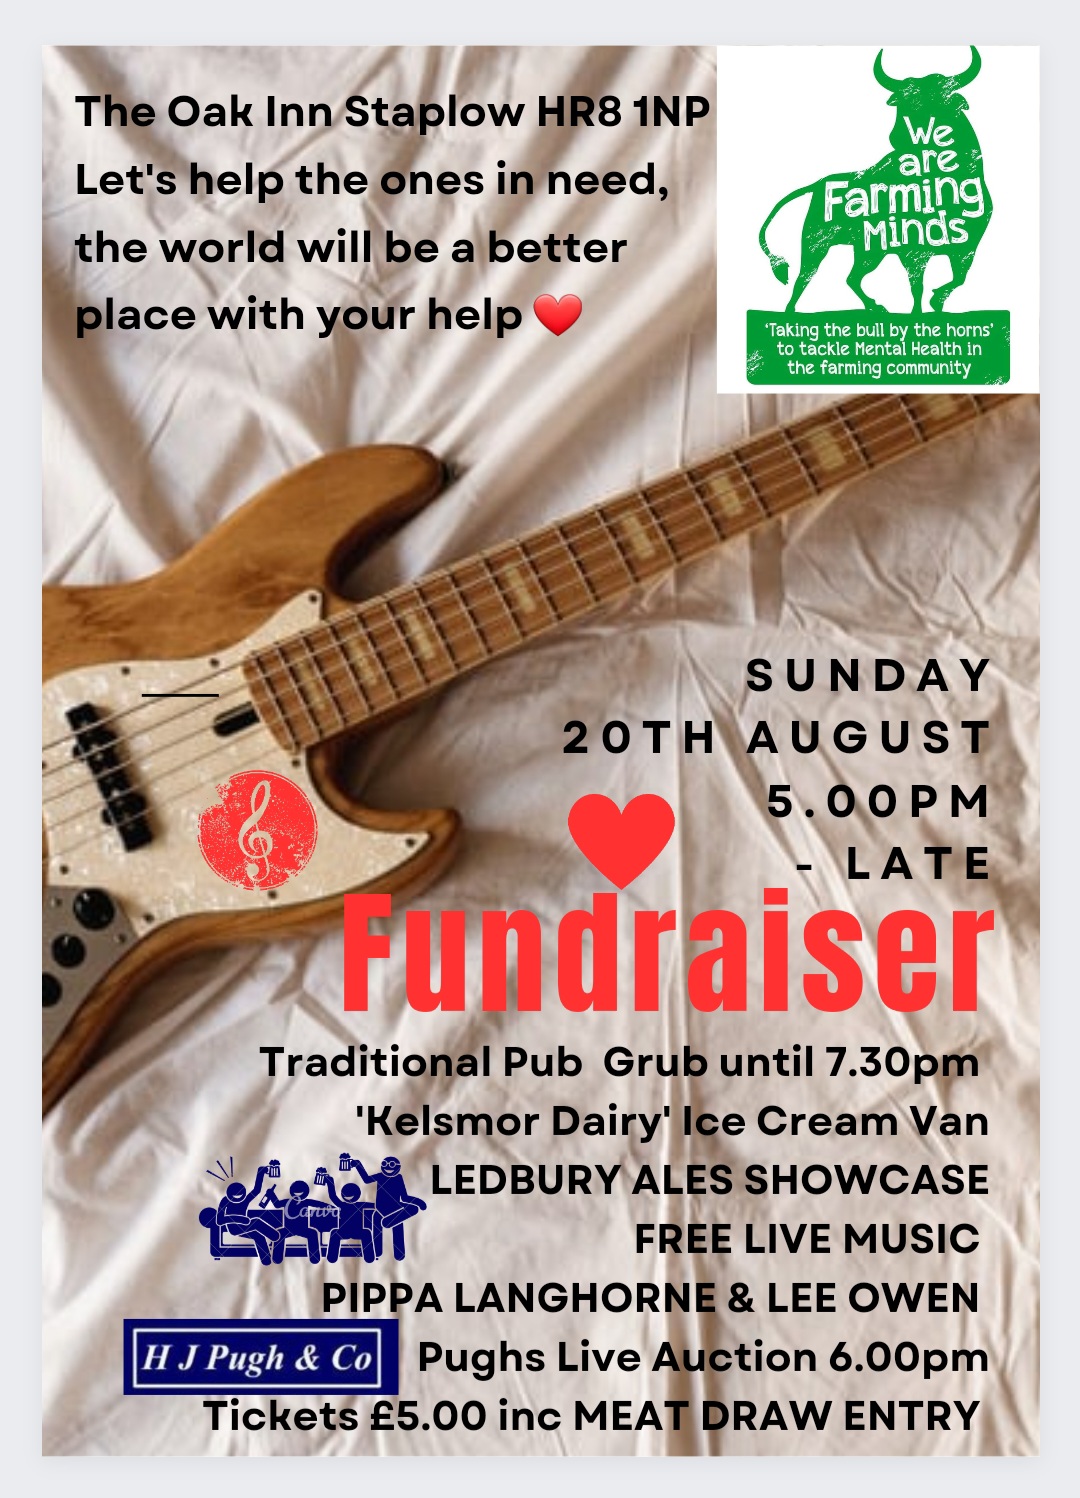 SUMMER FUNDRAISER Charity Event at the oak inn staplow ledbury